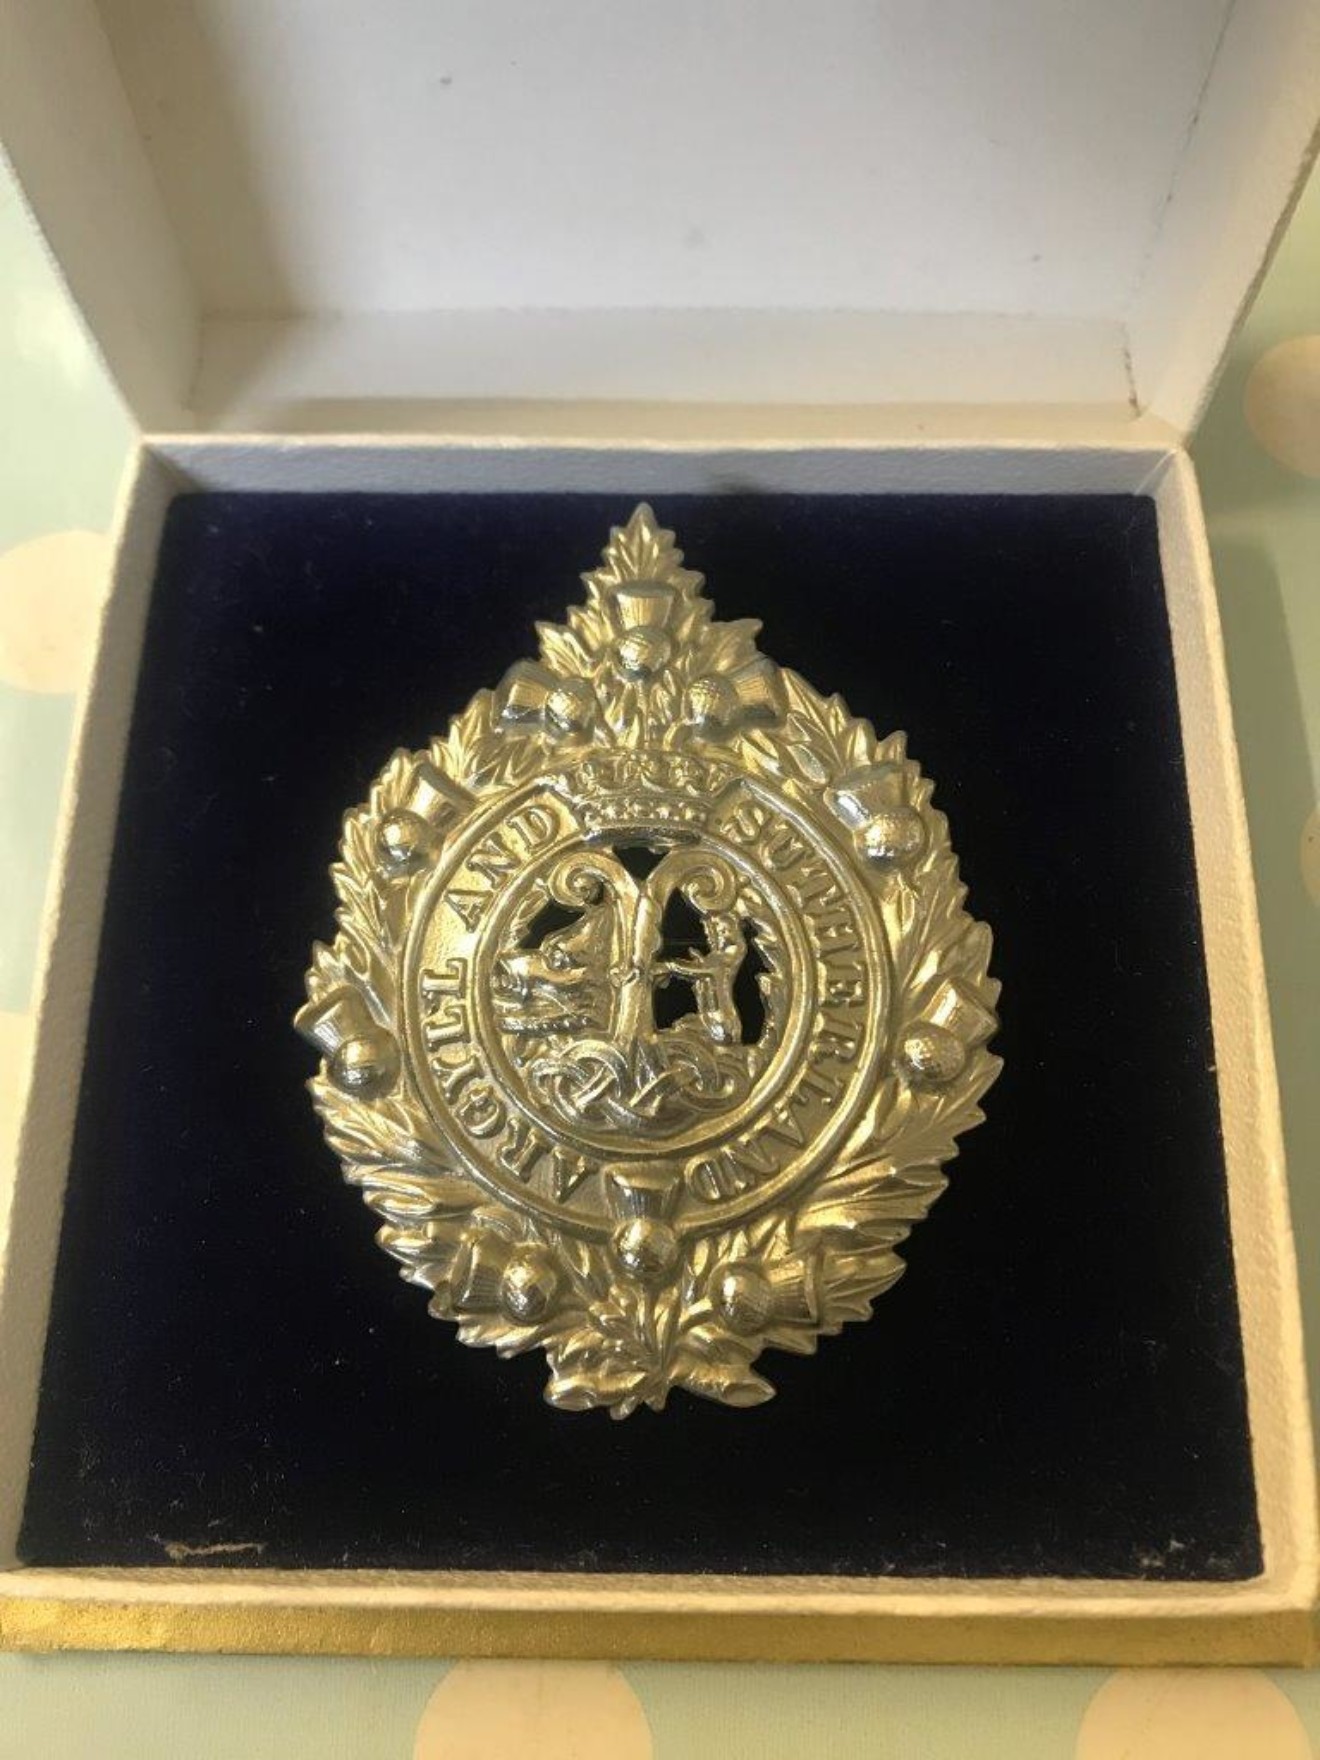 Argyll & Sutherland Highlanders White Metal Cap Badge